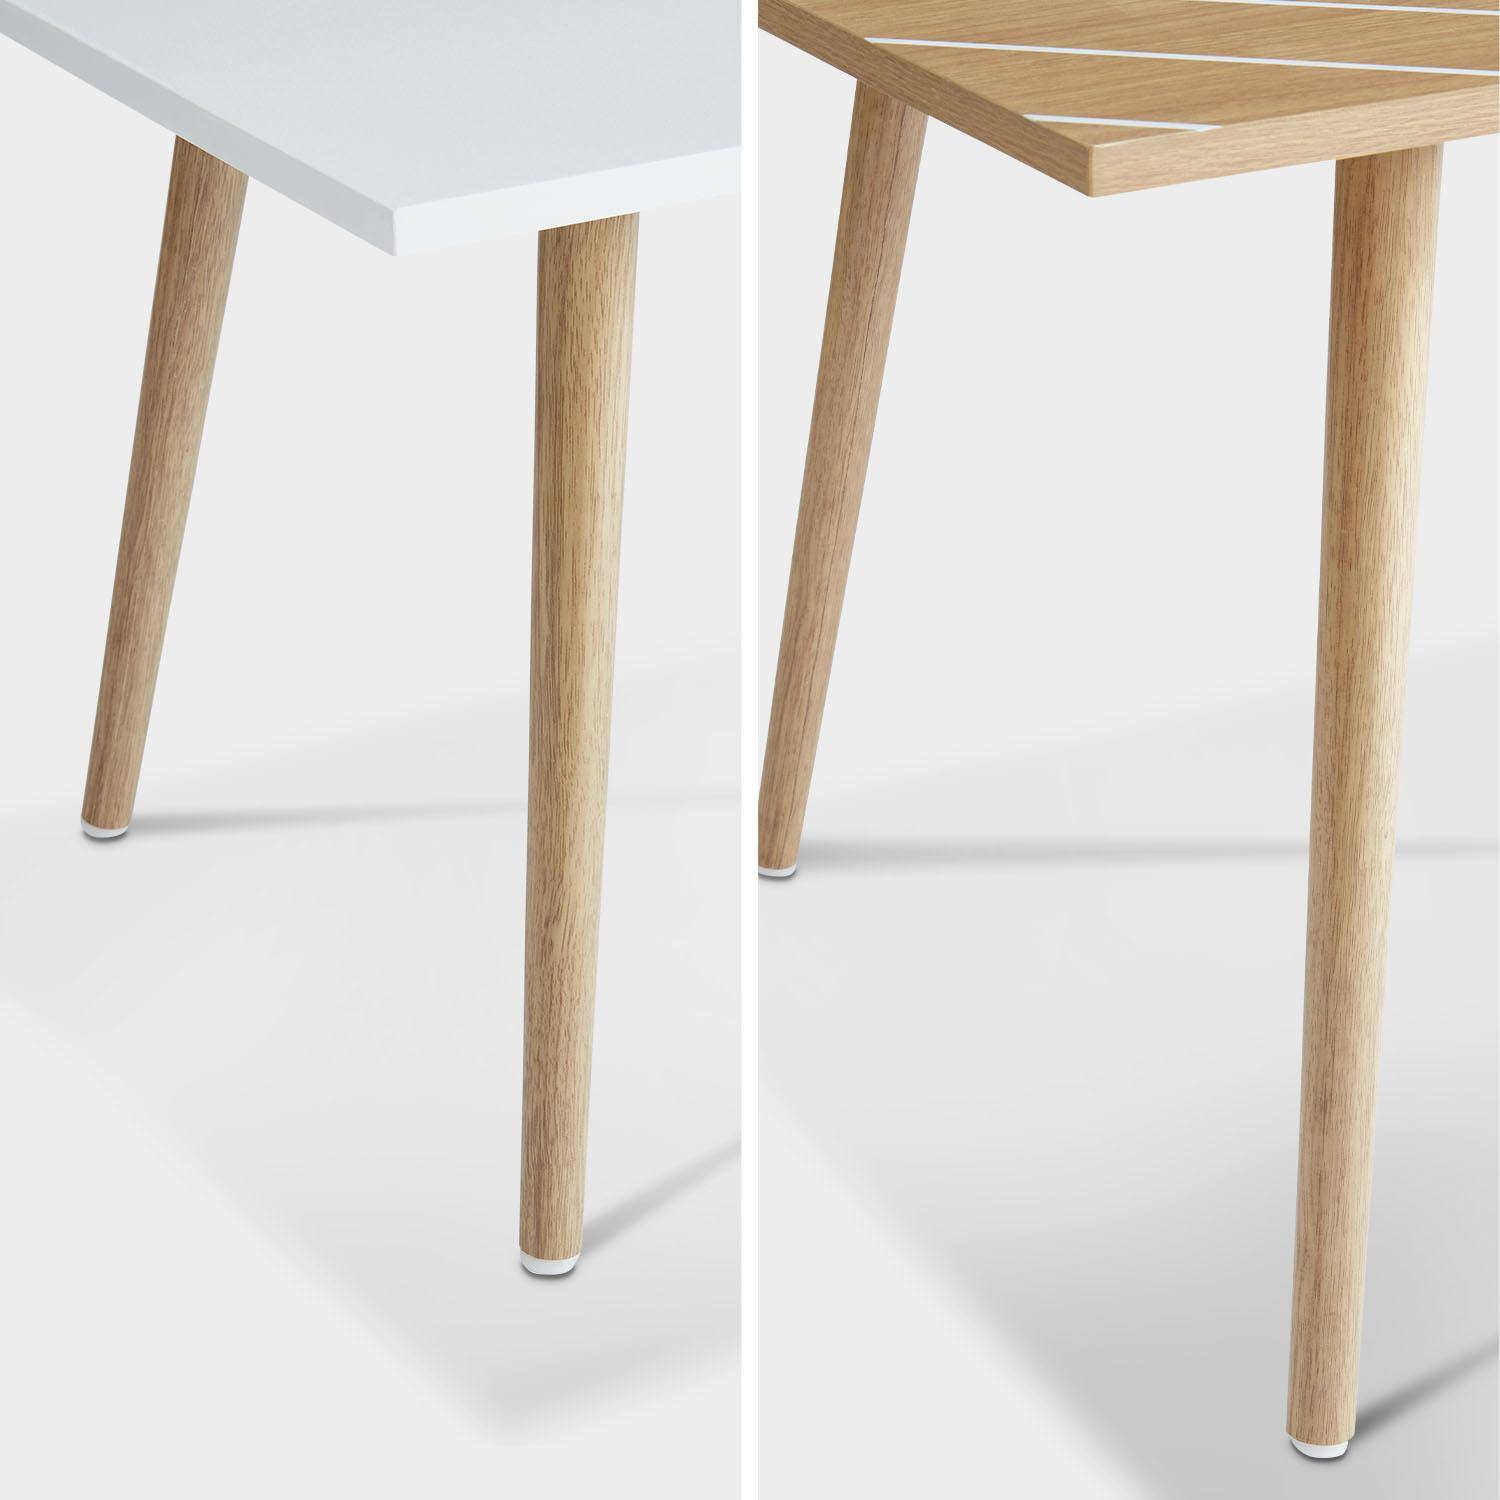 Conjunto de 2 mesas de centro natural y blanco - 110x50x45,5cm y 70x40x39cm - Etnik - base de madera maciza de eucalipto, diseño escandinavo,sweeek,Photo4